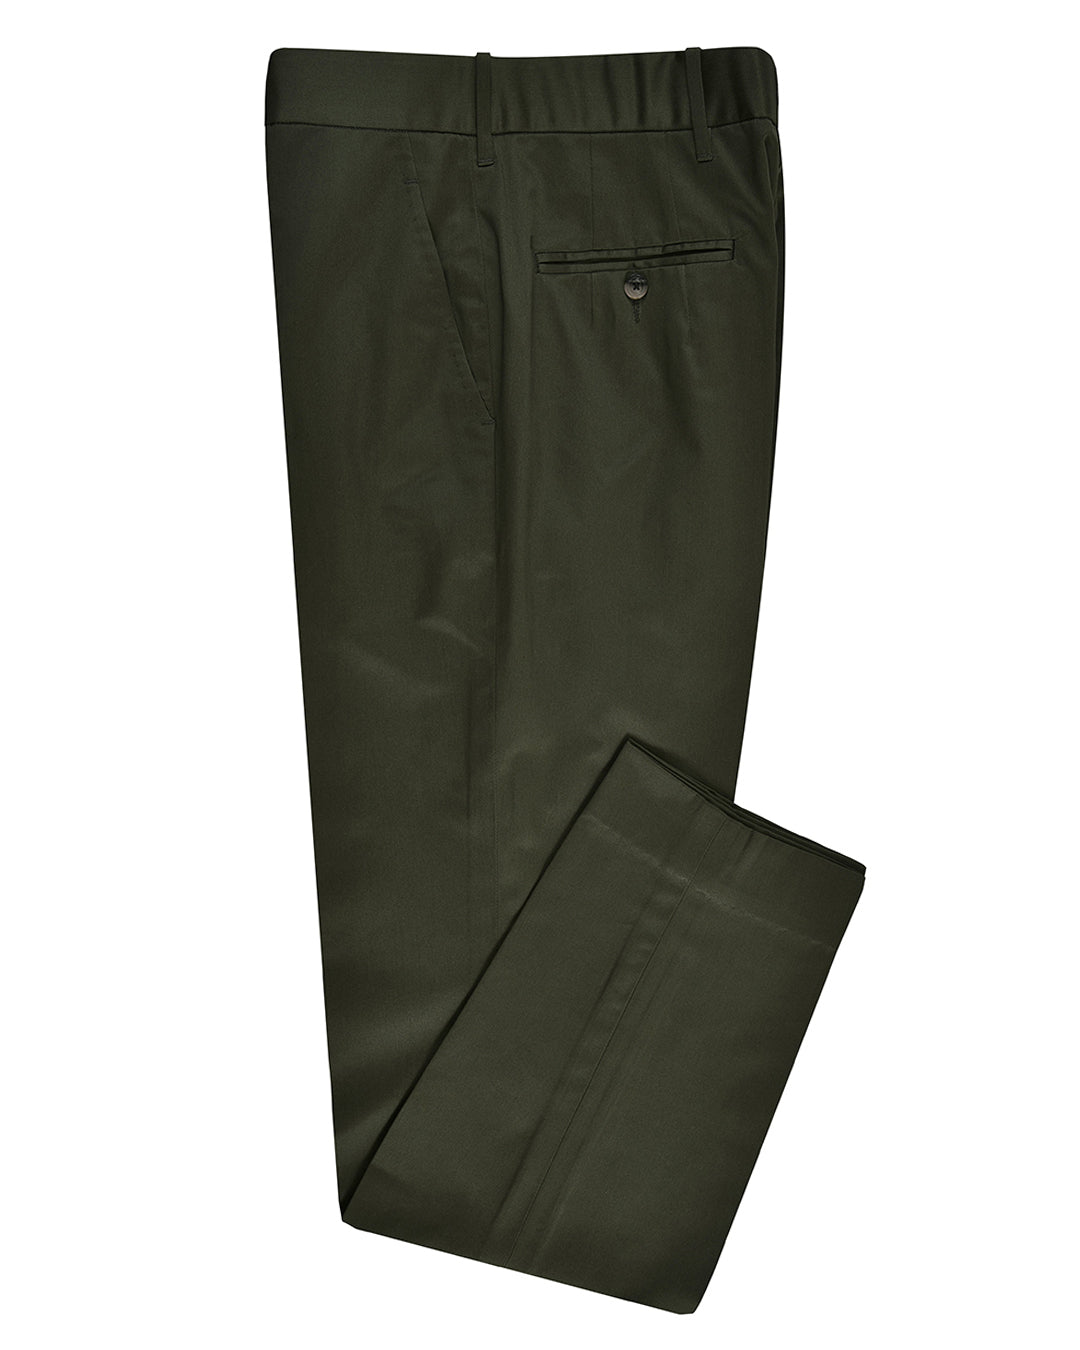 Luxire Custom Clothing Dark Army Green Cotton Dress Pant